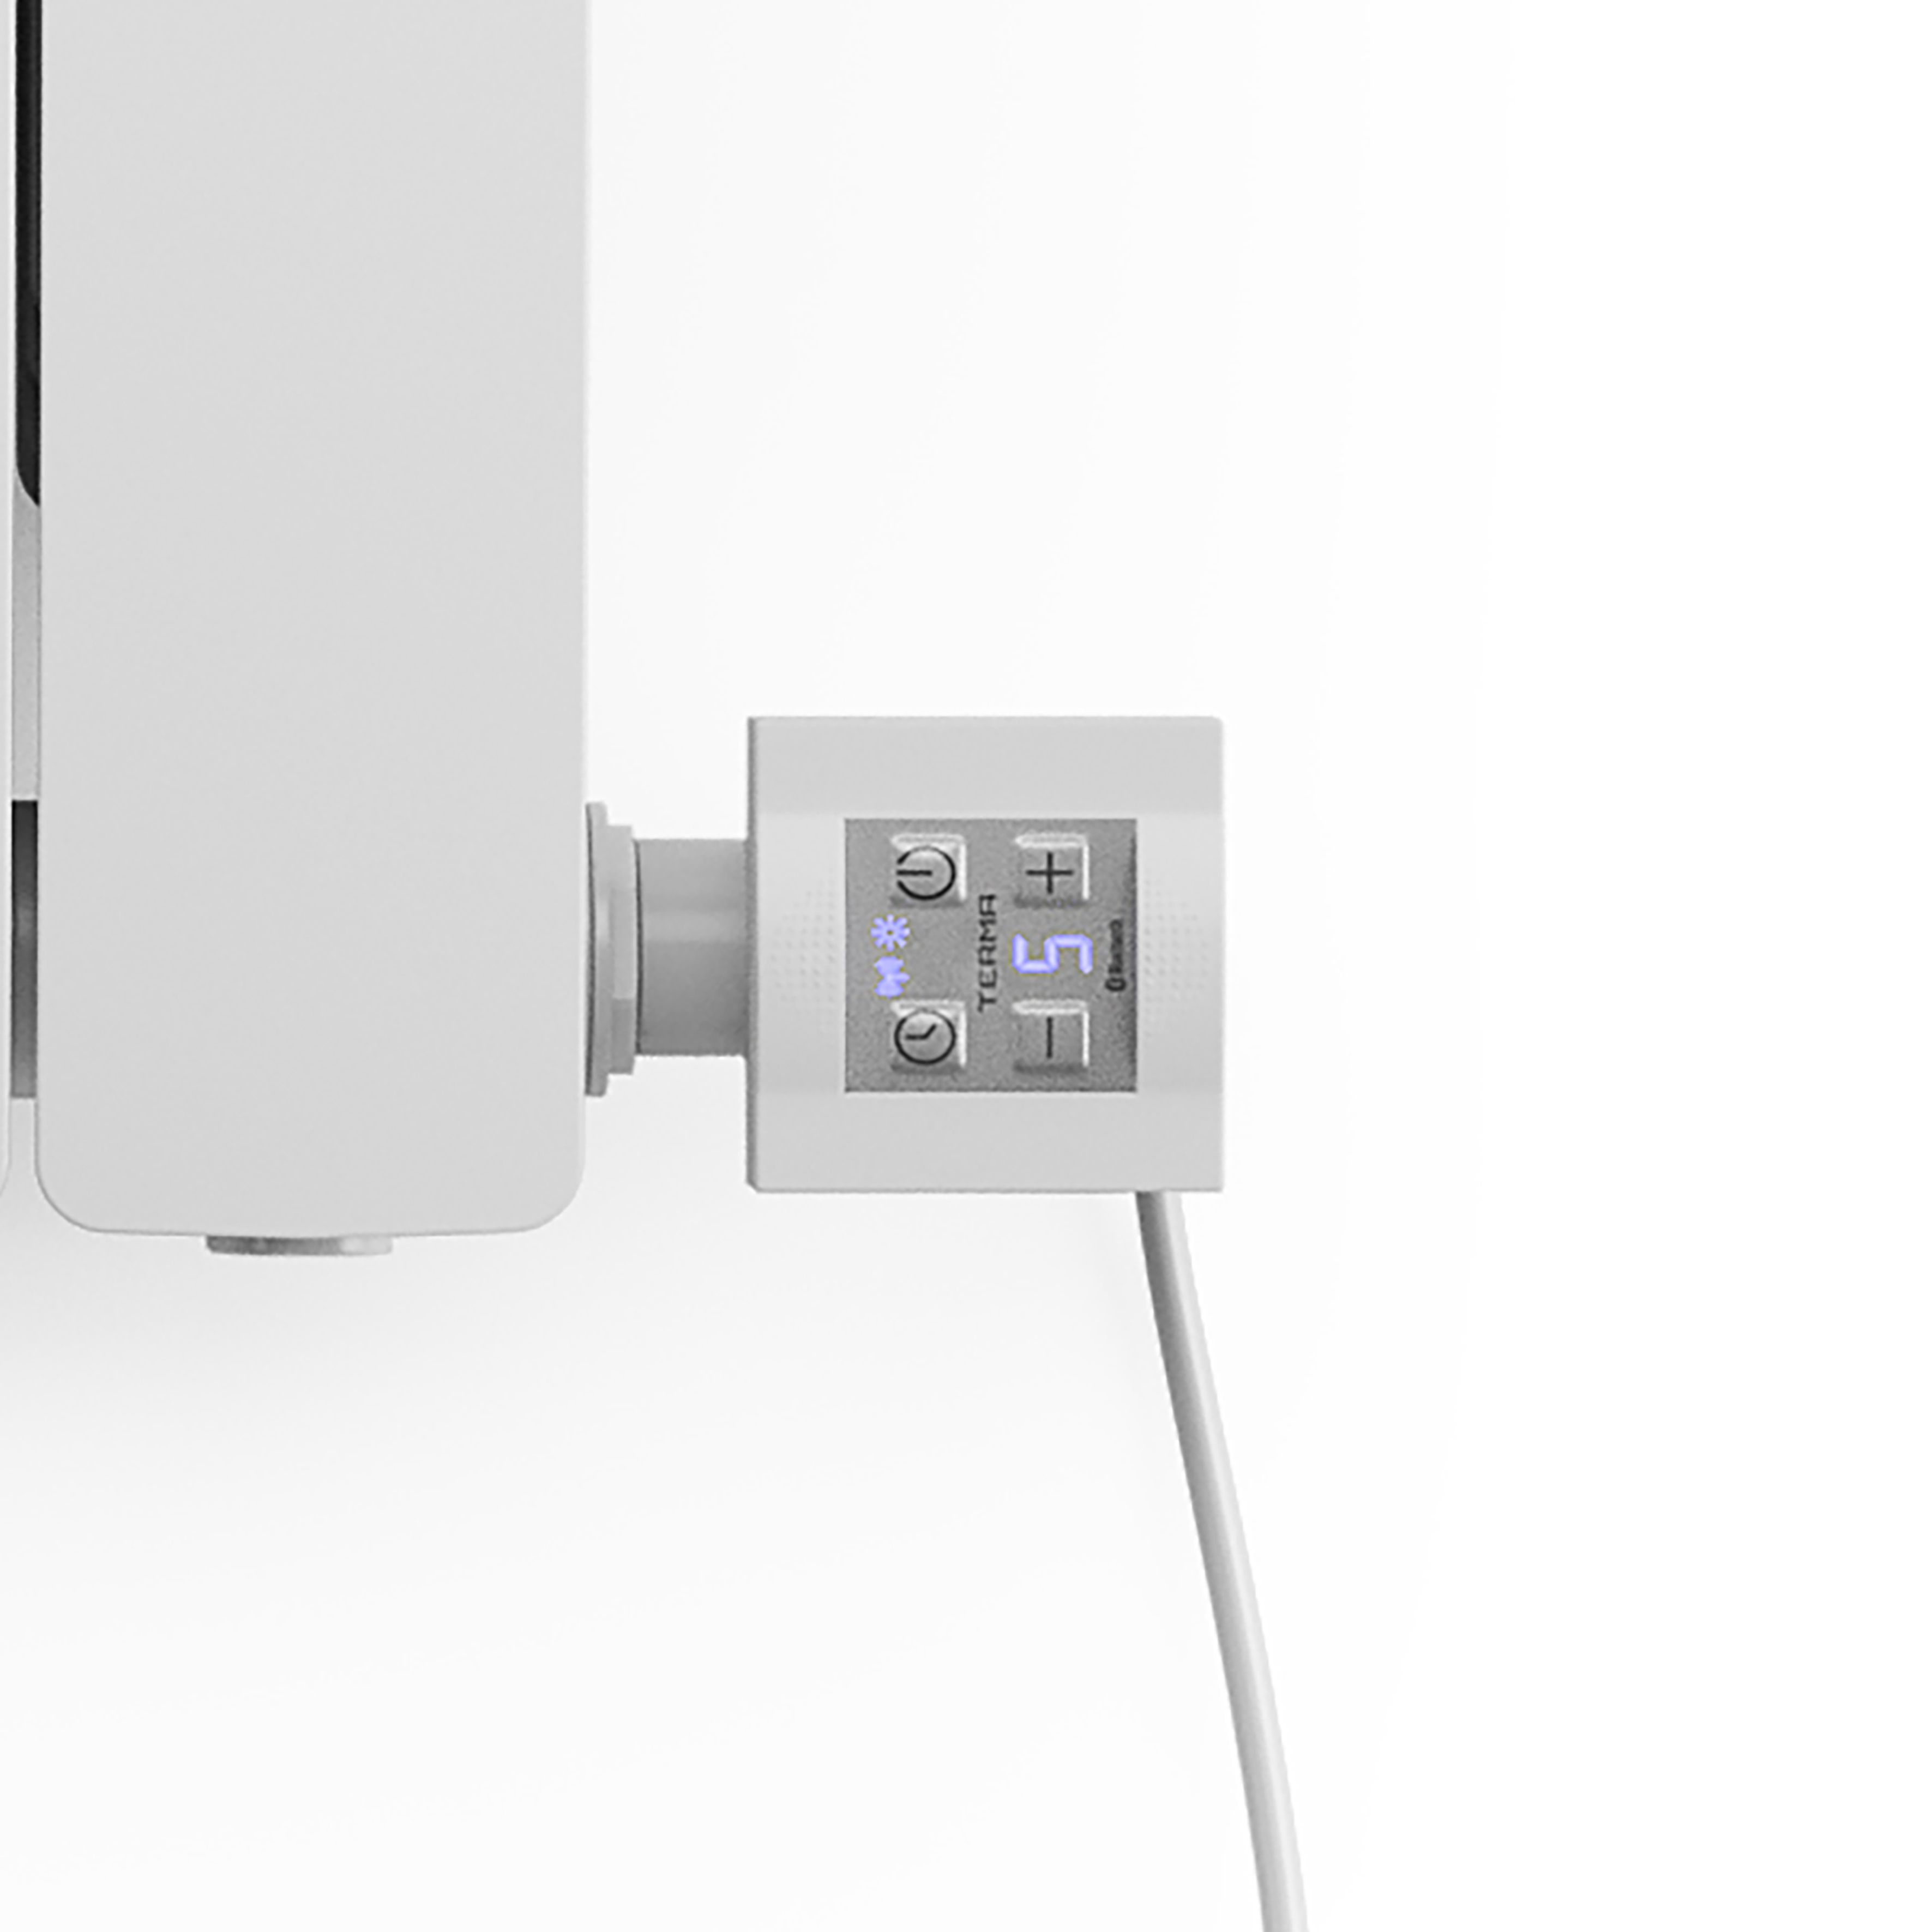 Terma White Thermostat temperature control Heating element